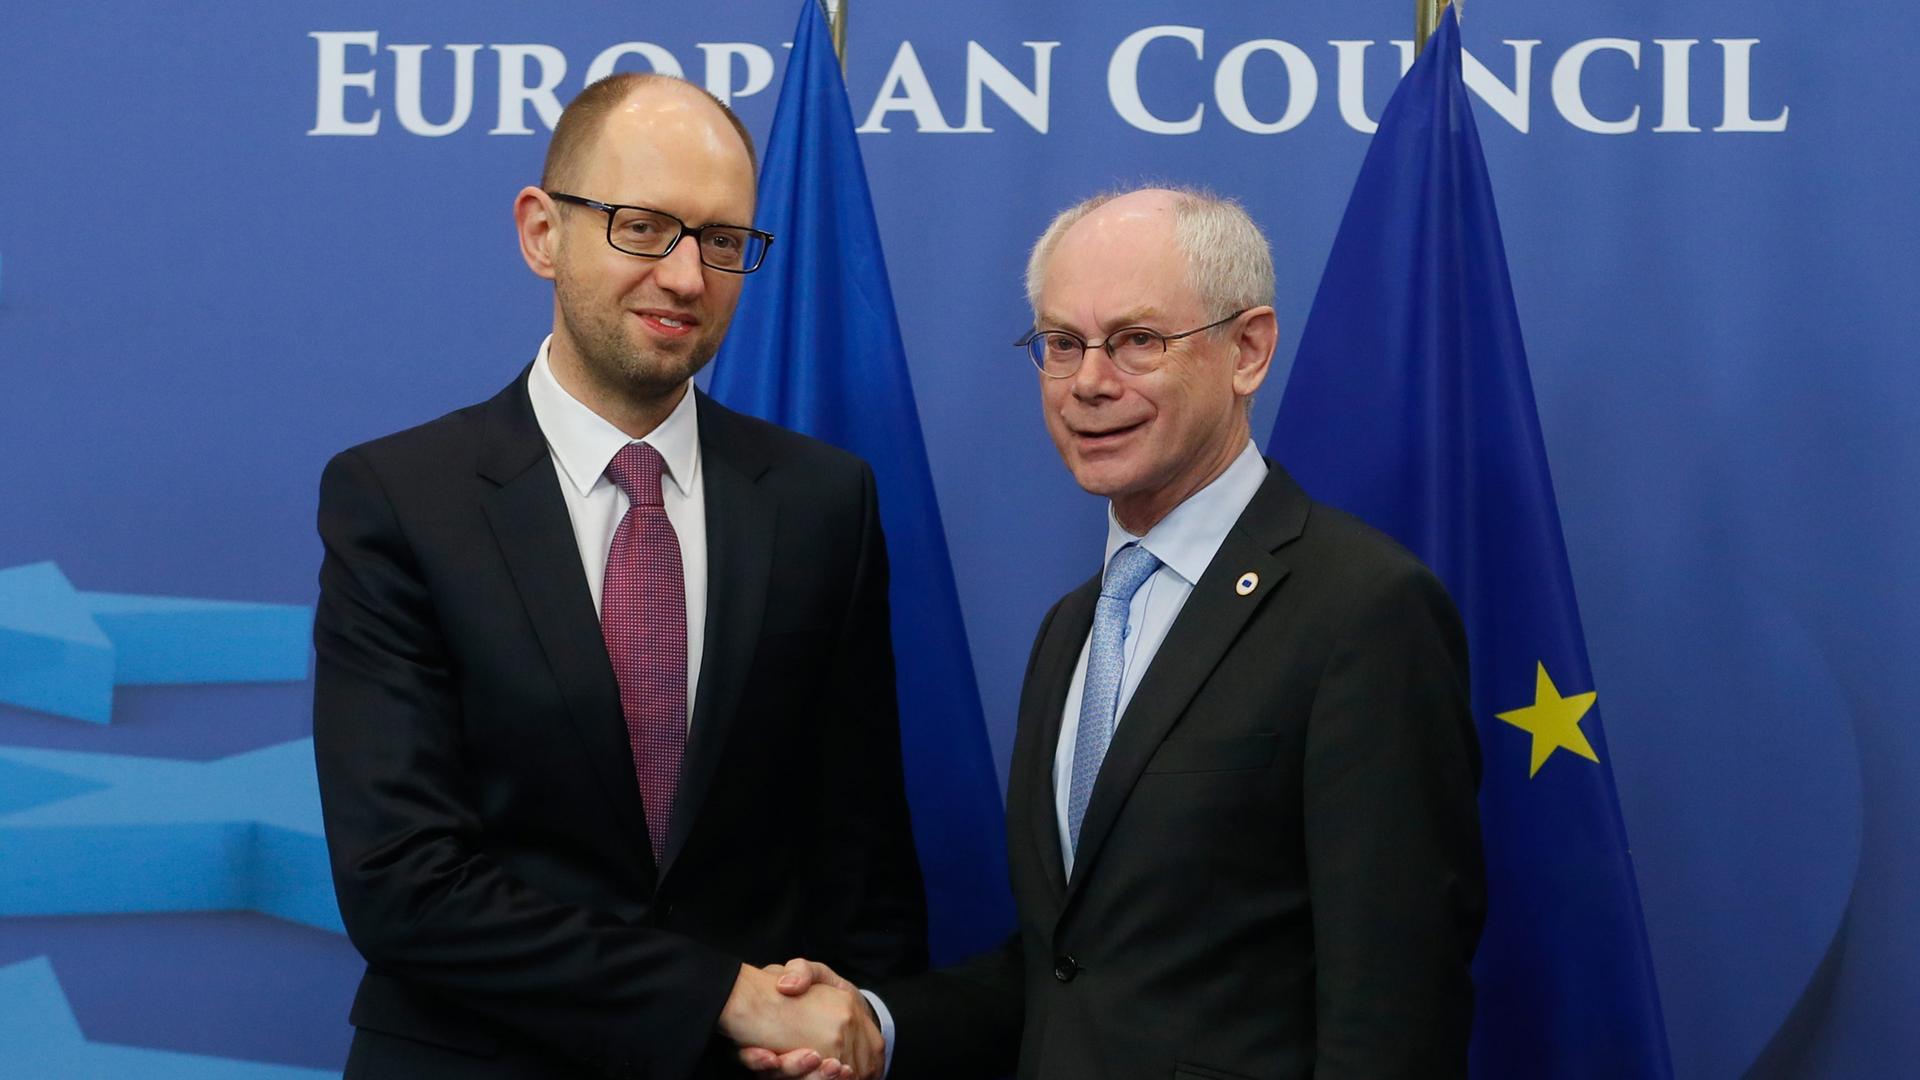 epa04111869 European Council President Herman Van Rompuy (R) welcomes Ukrainian Prime Minister Arseniy Yatsenyuk prior to a EU-Ukraine head of states Summit at the EU council headquarters in Brussels, Belgium, 06 March 2014. EU leaders are meeting in Brus